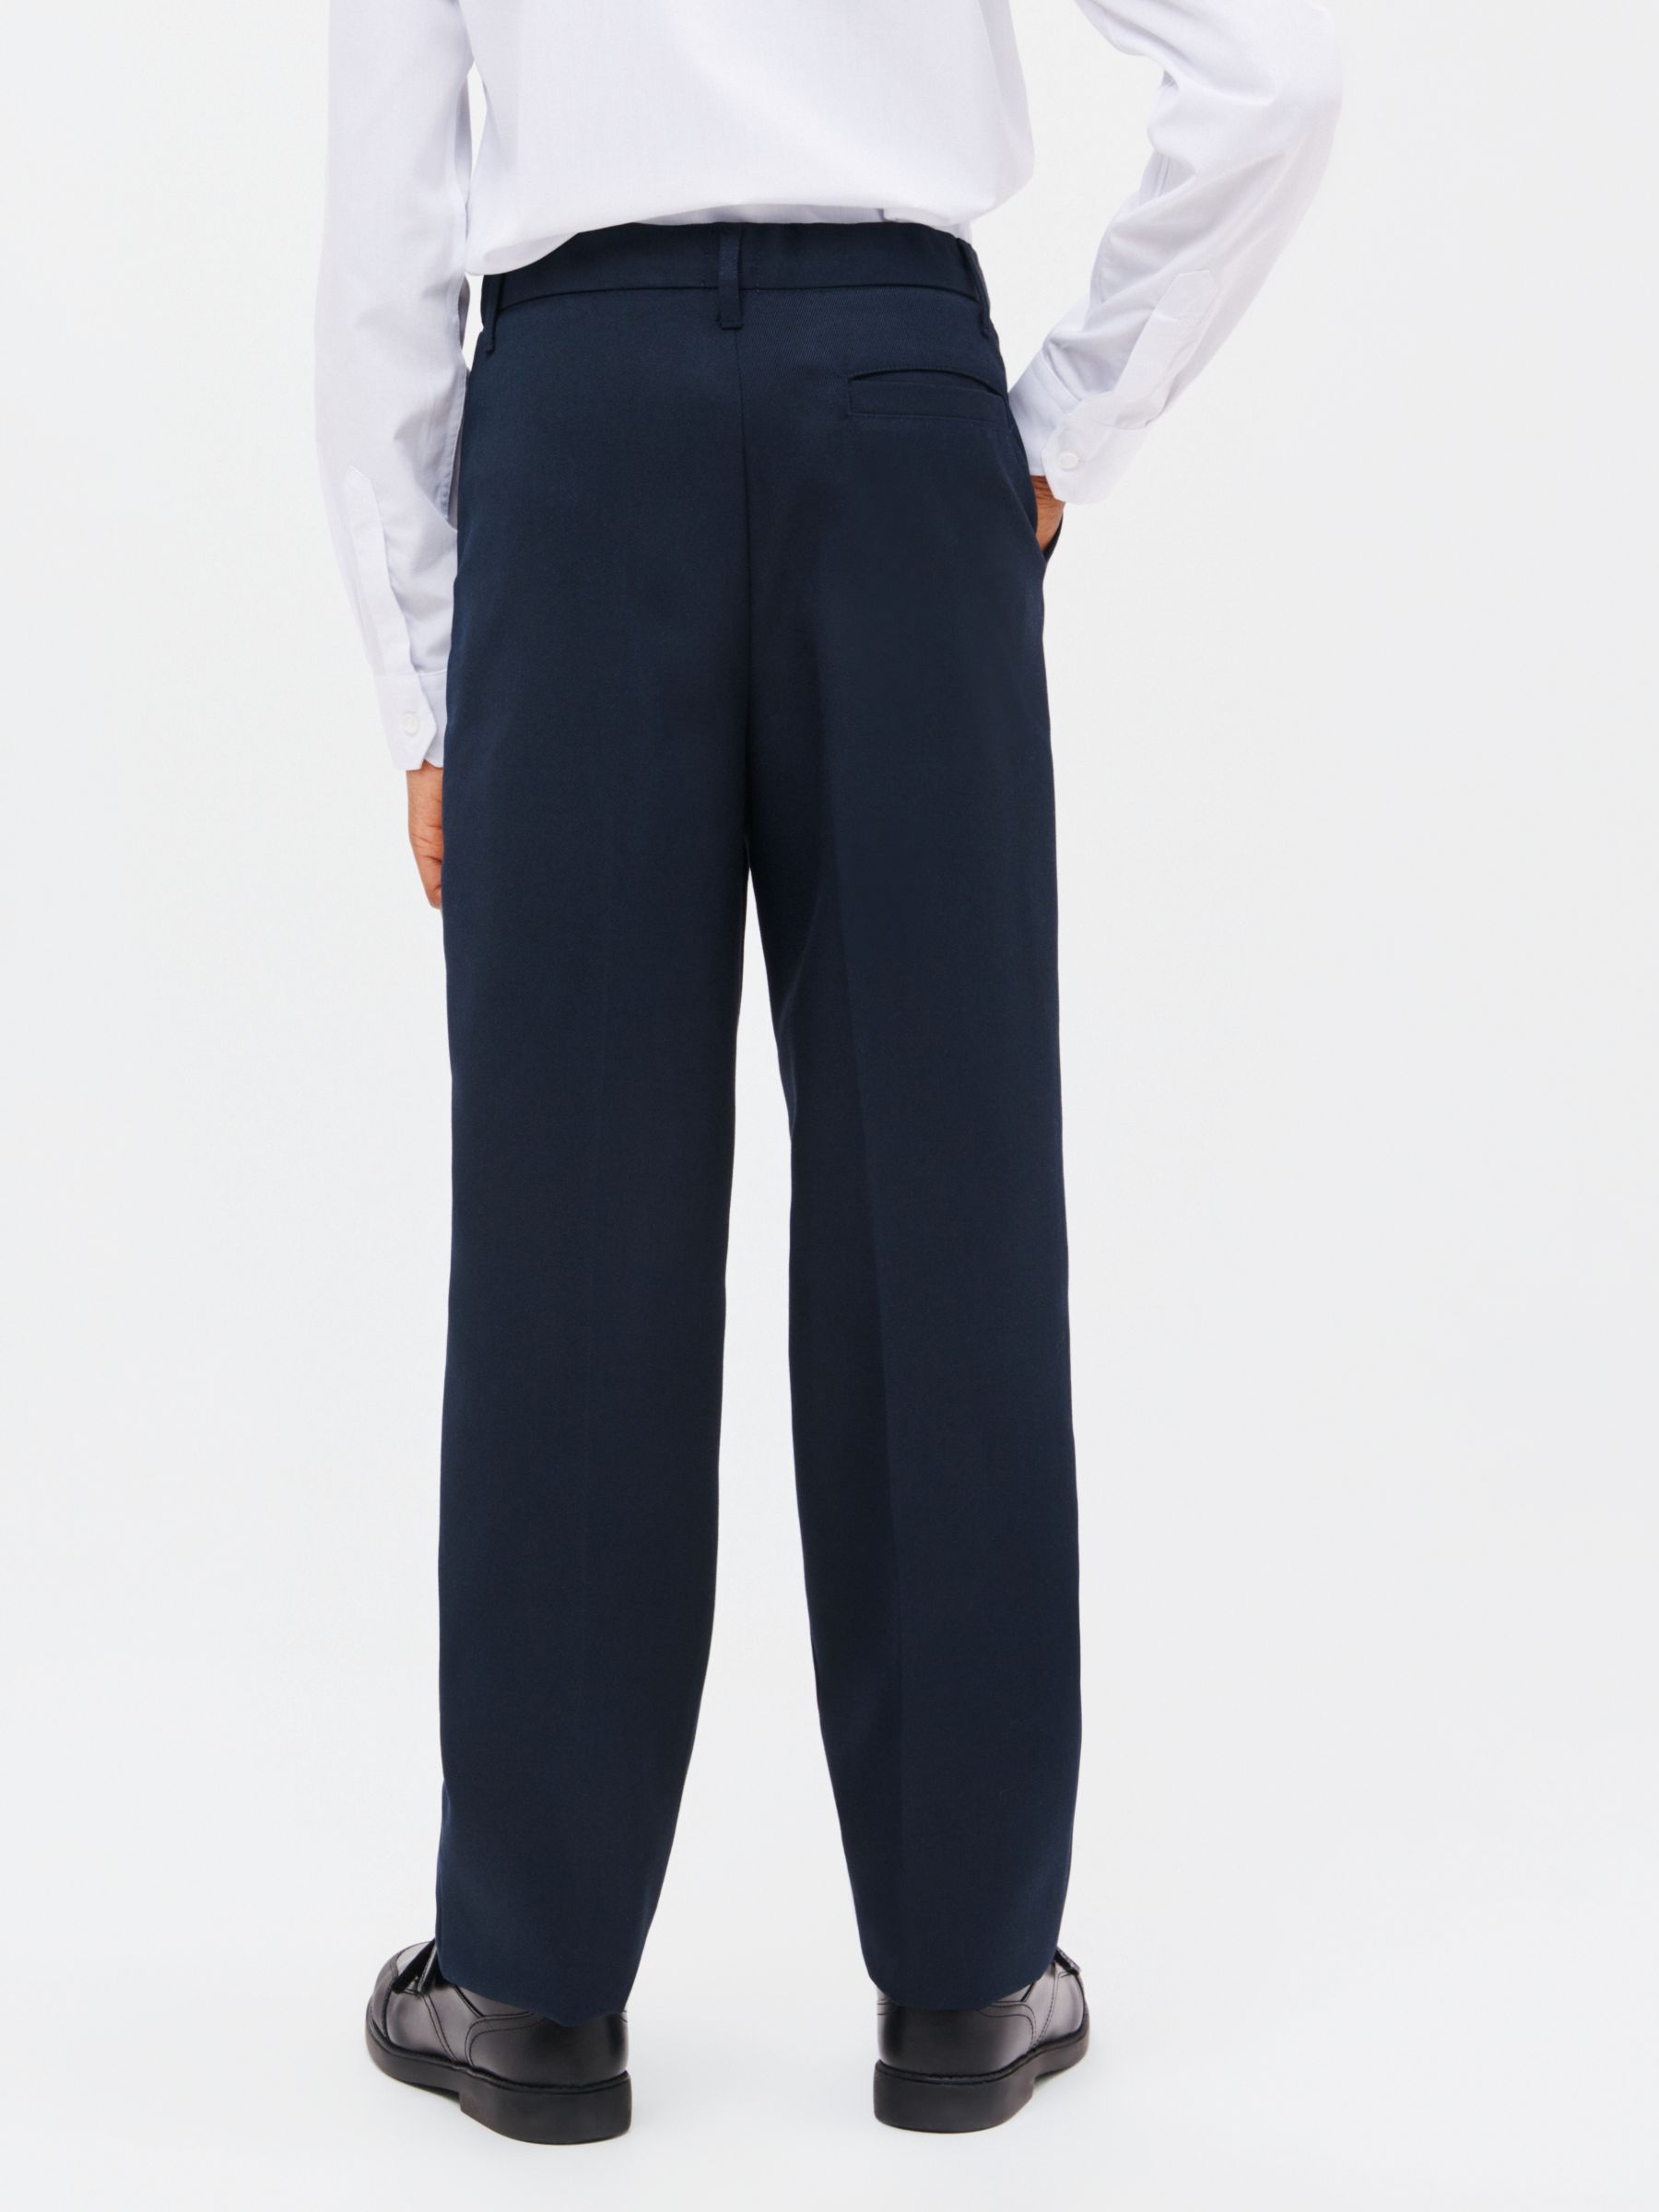 School Uniform Pant For Kids Regular Fit (Grey)